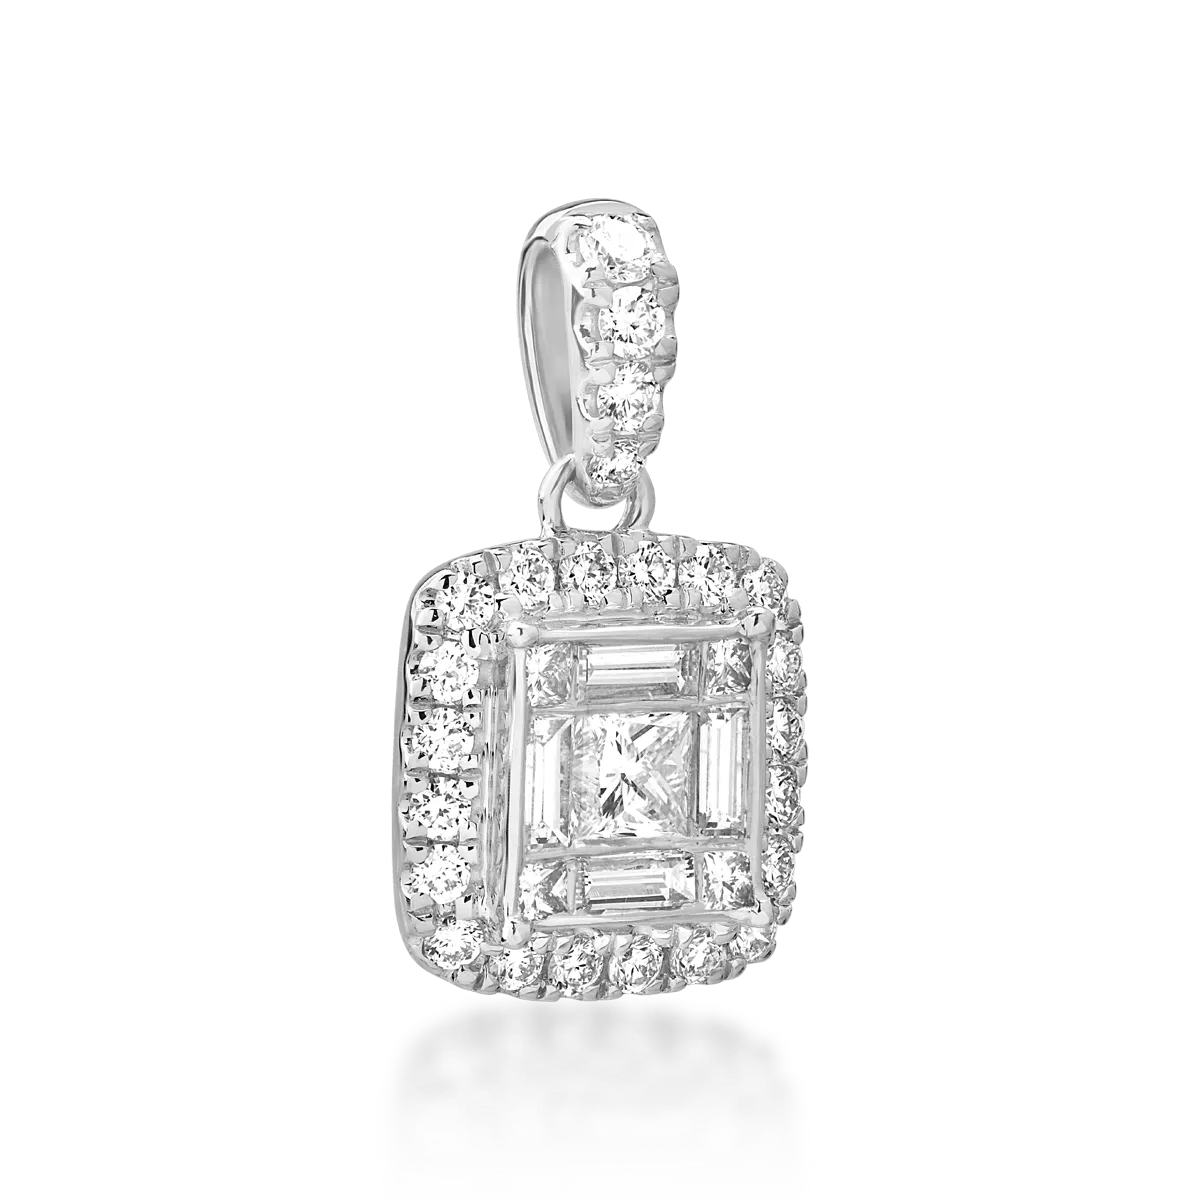 18K white gold pendant with 0.63ct diamonds